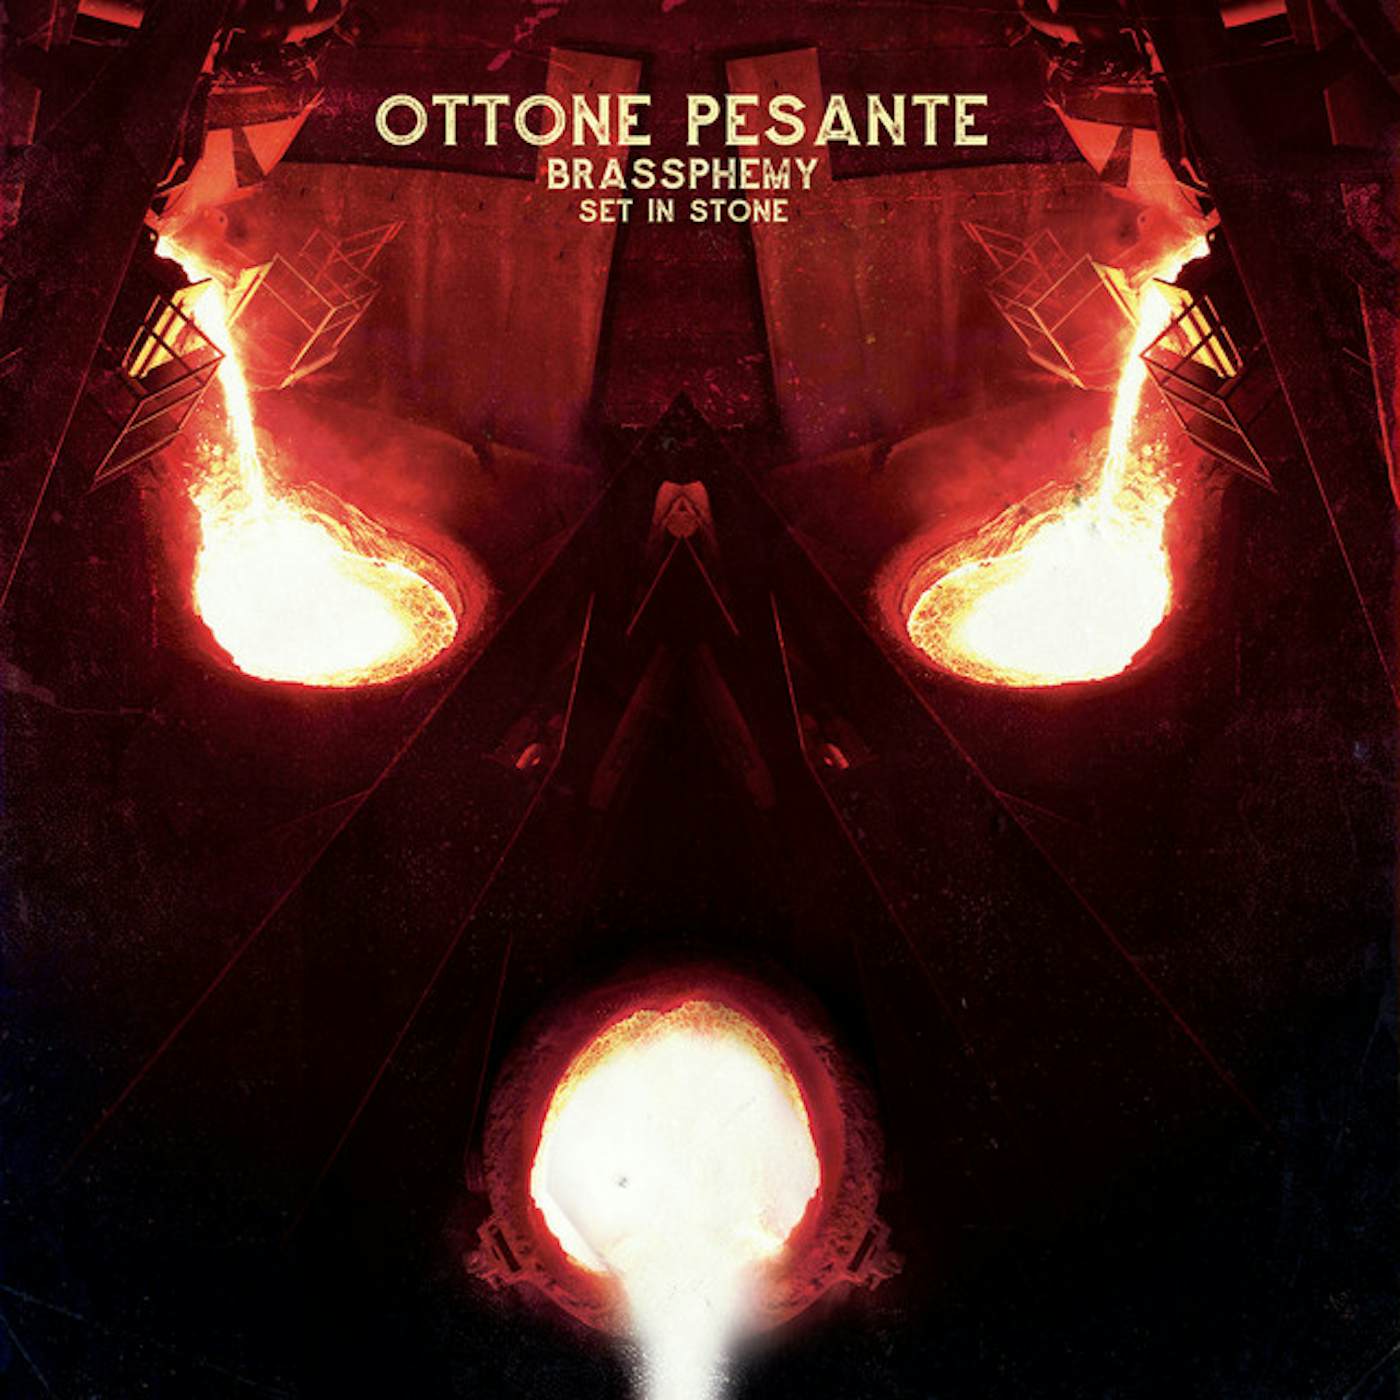 Ottone Pesante Brassphemy Set in Stone Vinyl Record